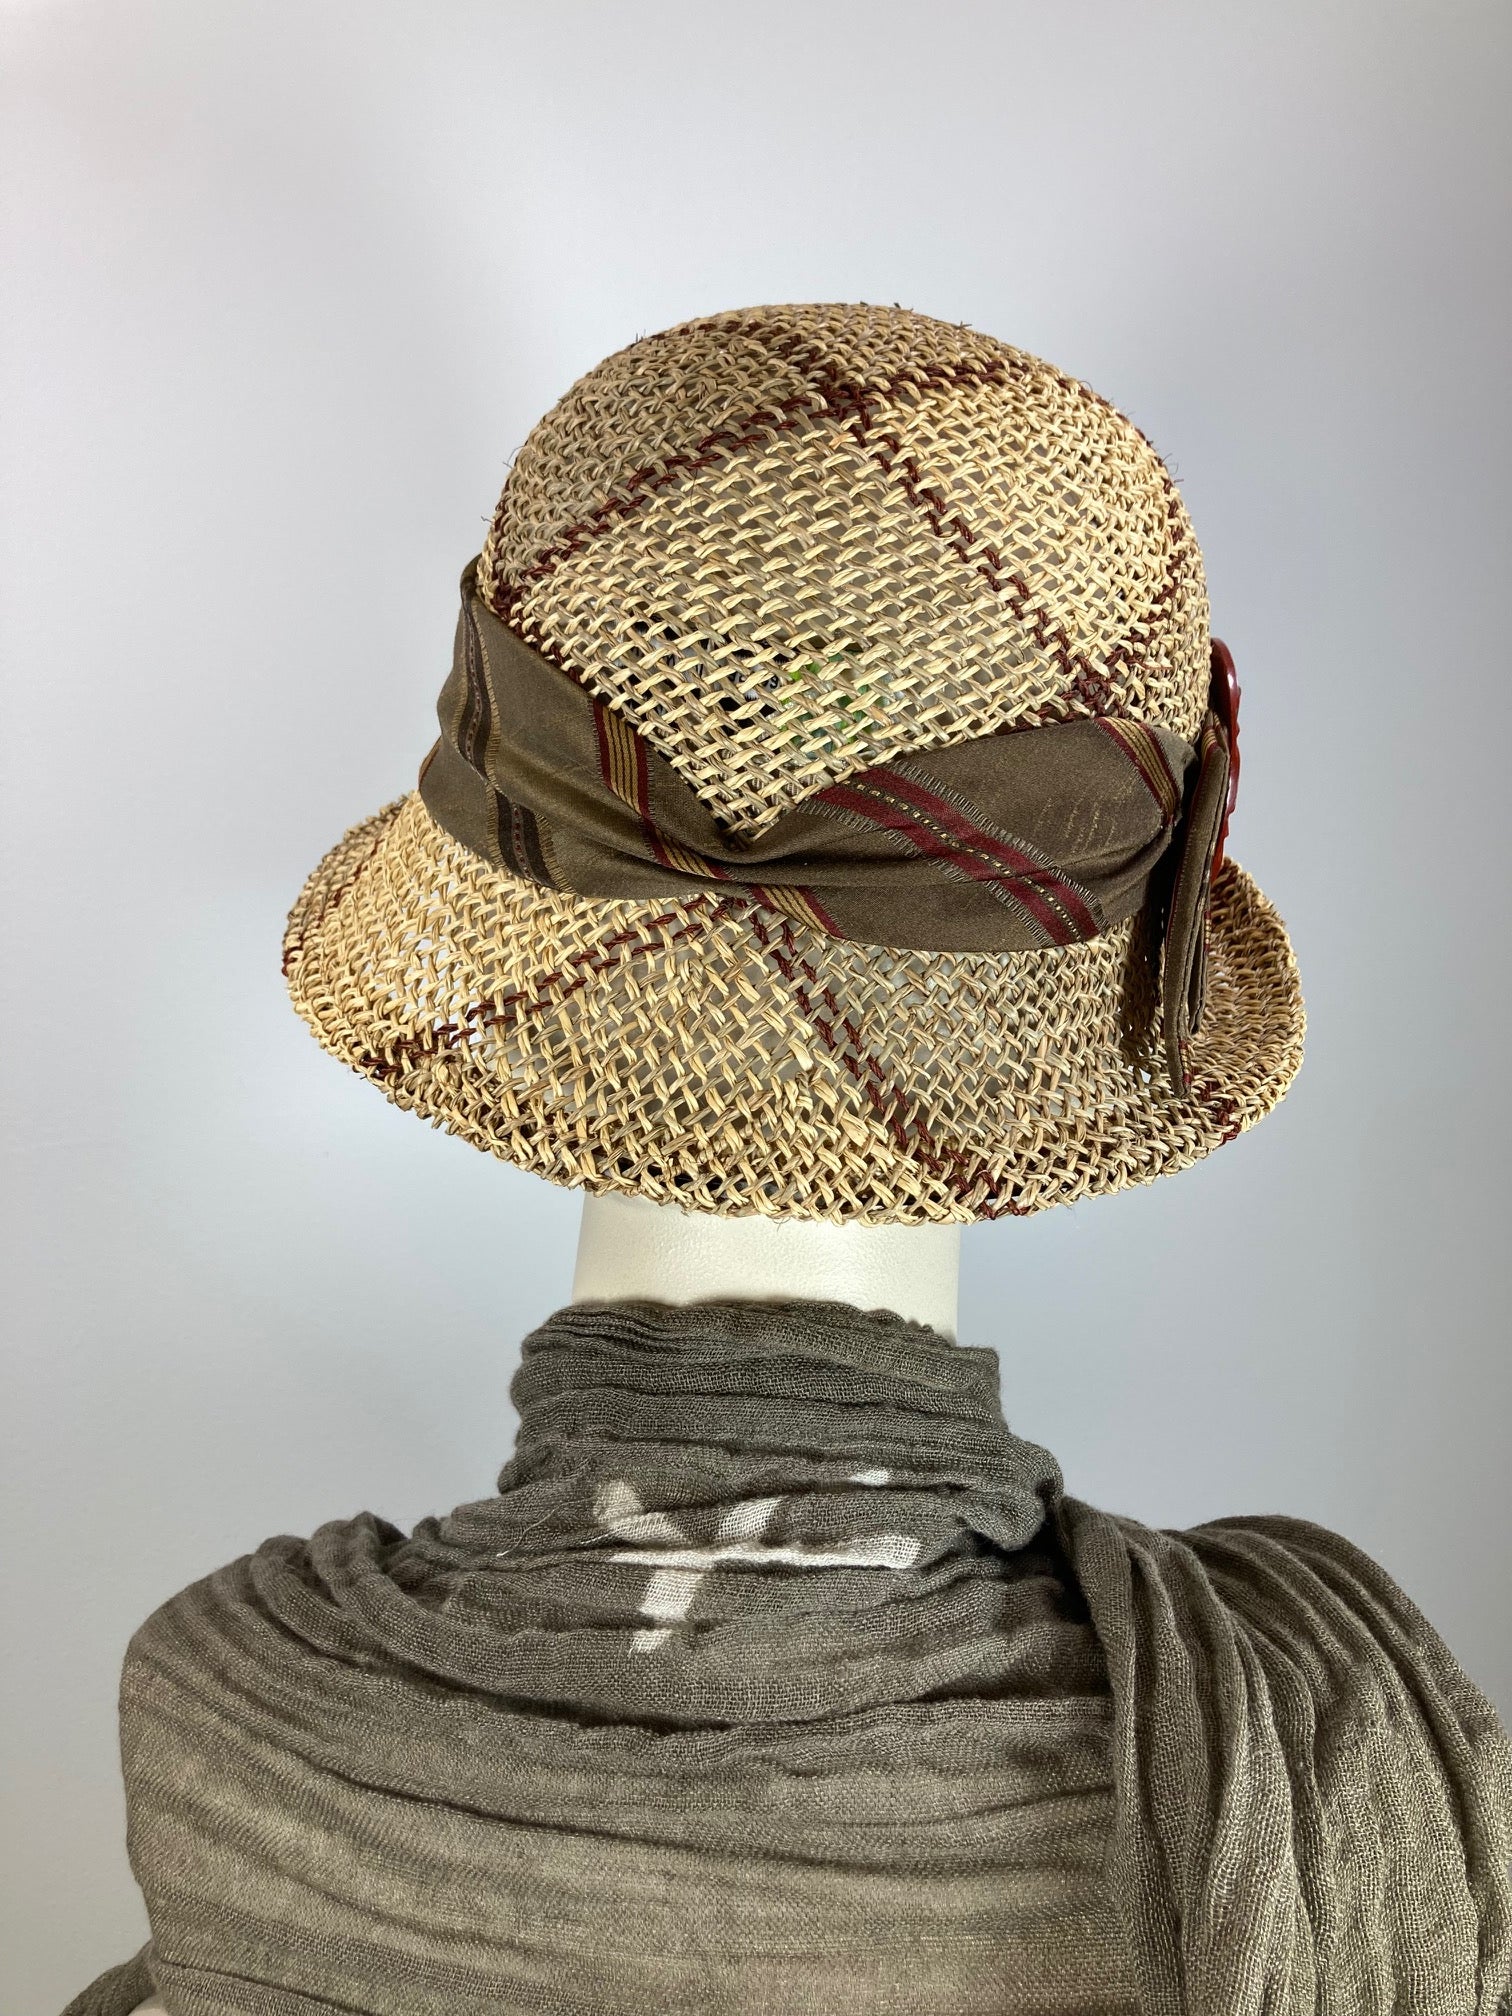 Casual plaid ladies straw cloche hat. 1920s style hat. Womens flapper hat. Beige brown burgundy hat. Light open weave cool summer hat women.